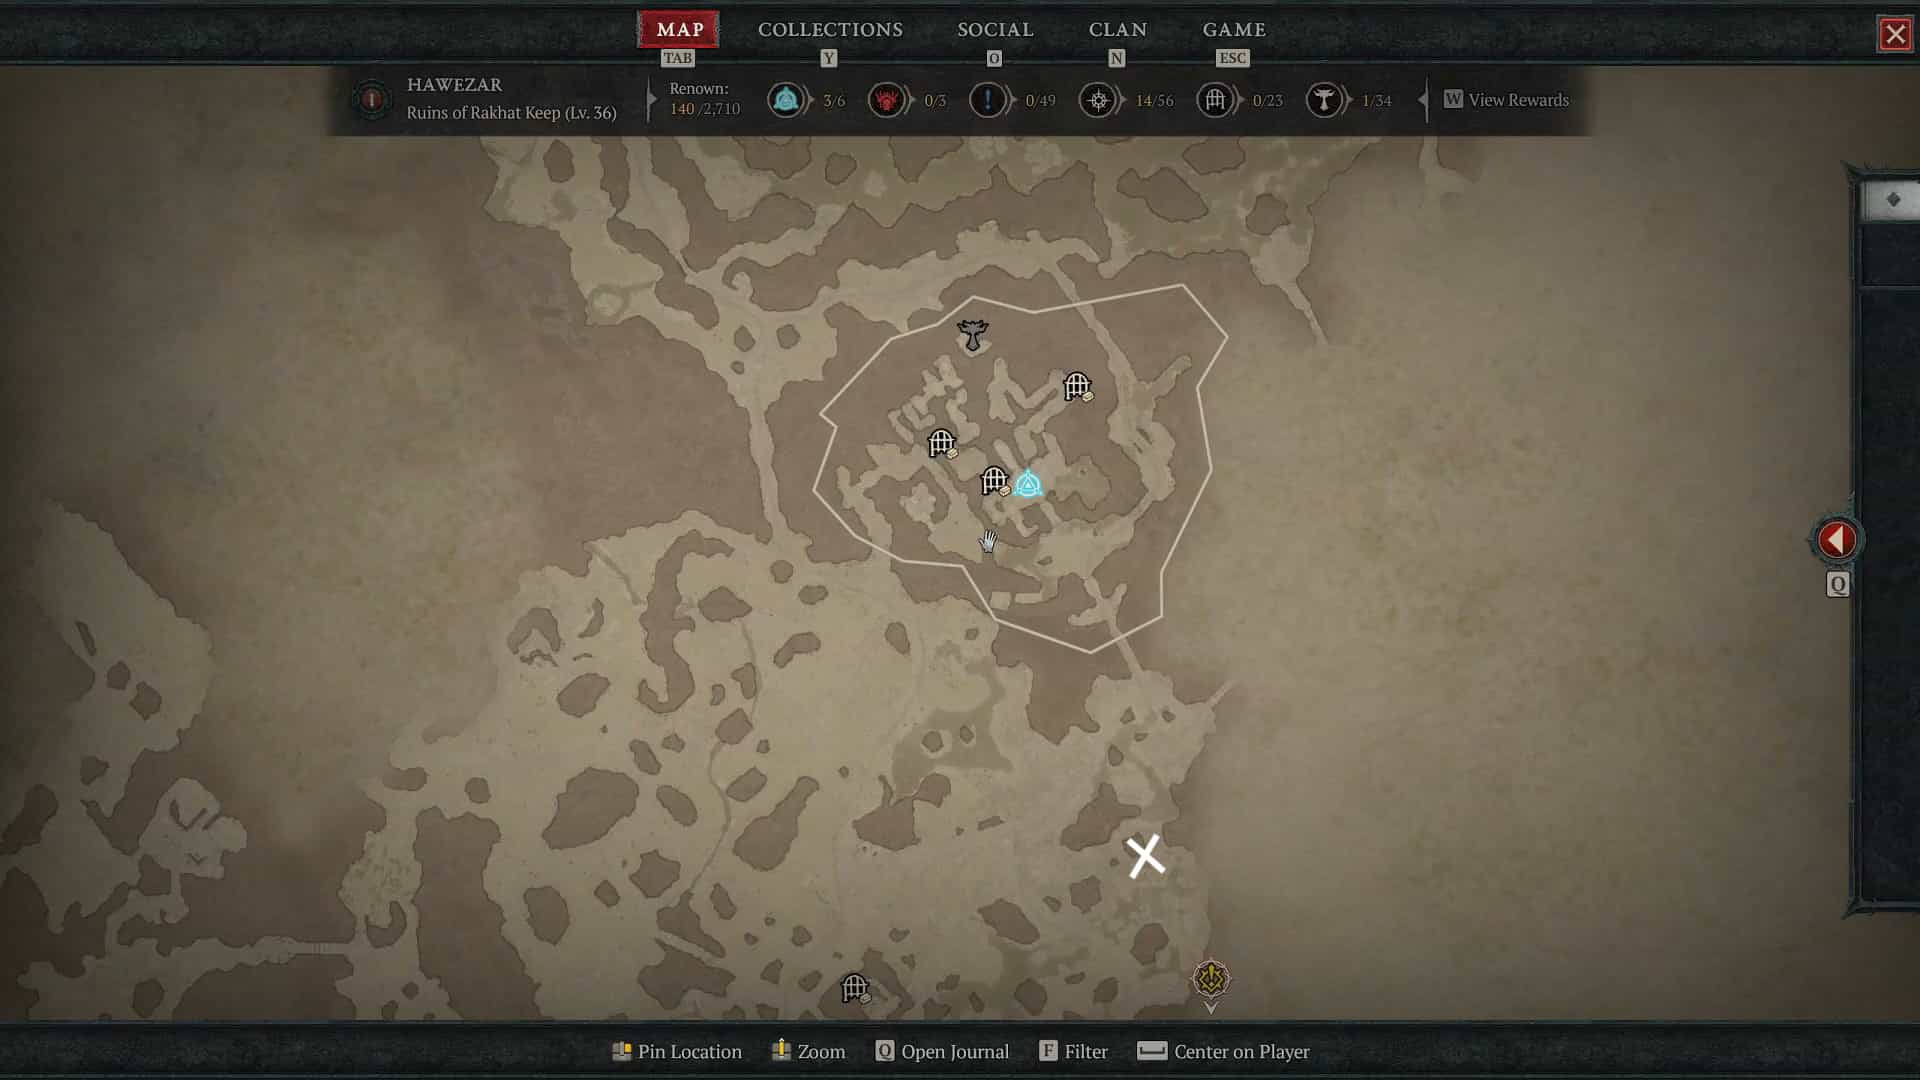 Diablo 4 Silent Chest locations: An image of a map with the marked location of a Silent Chest in the Hawezar region.